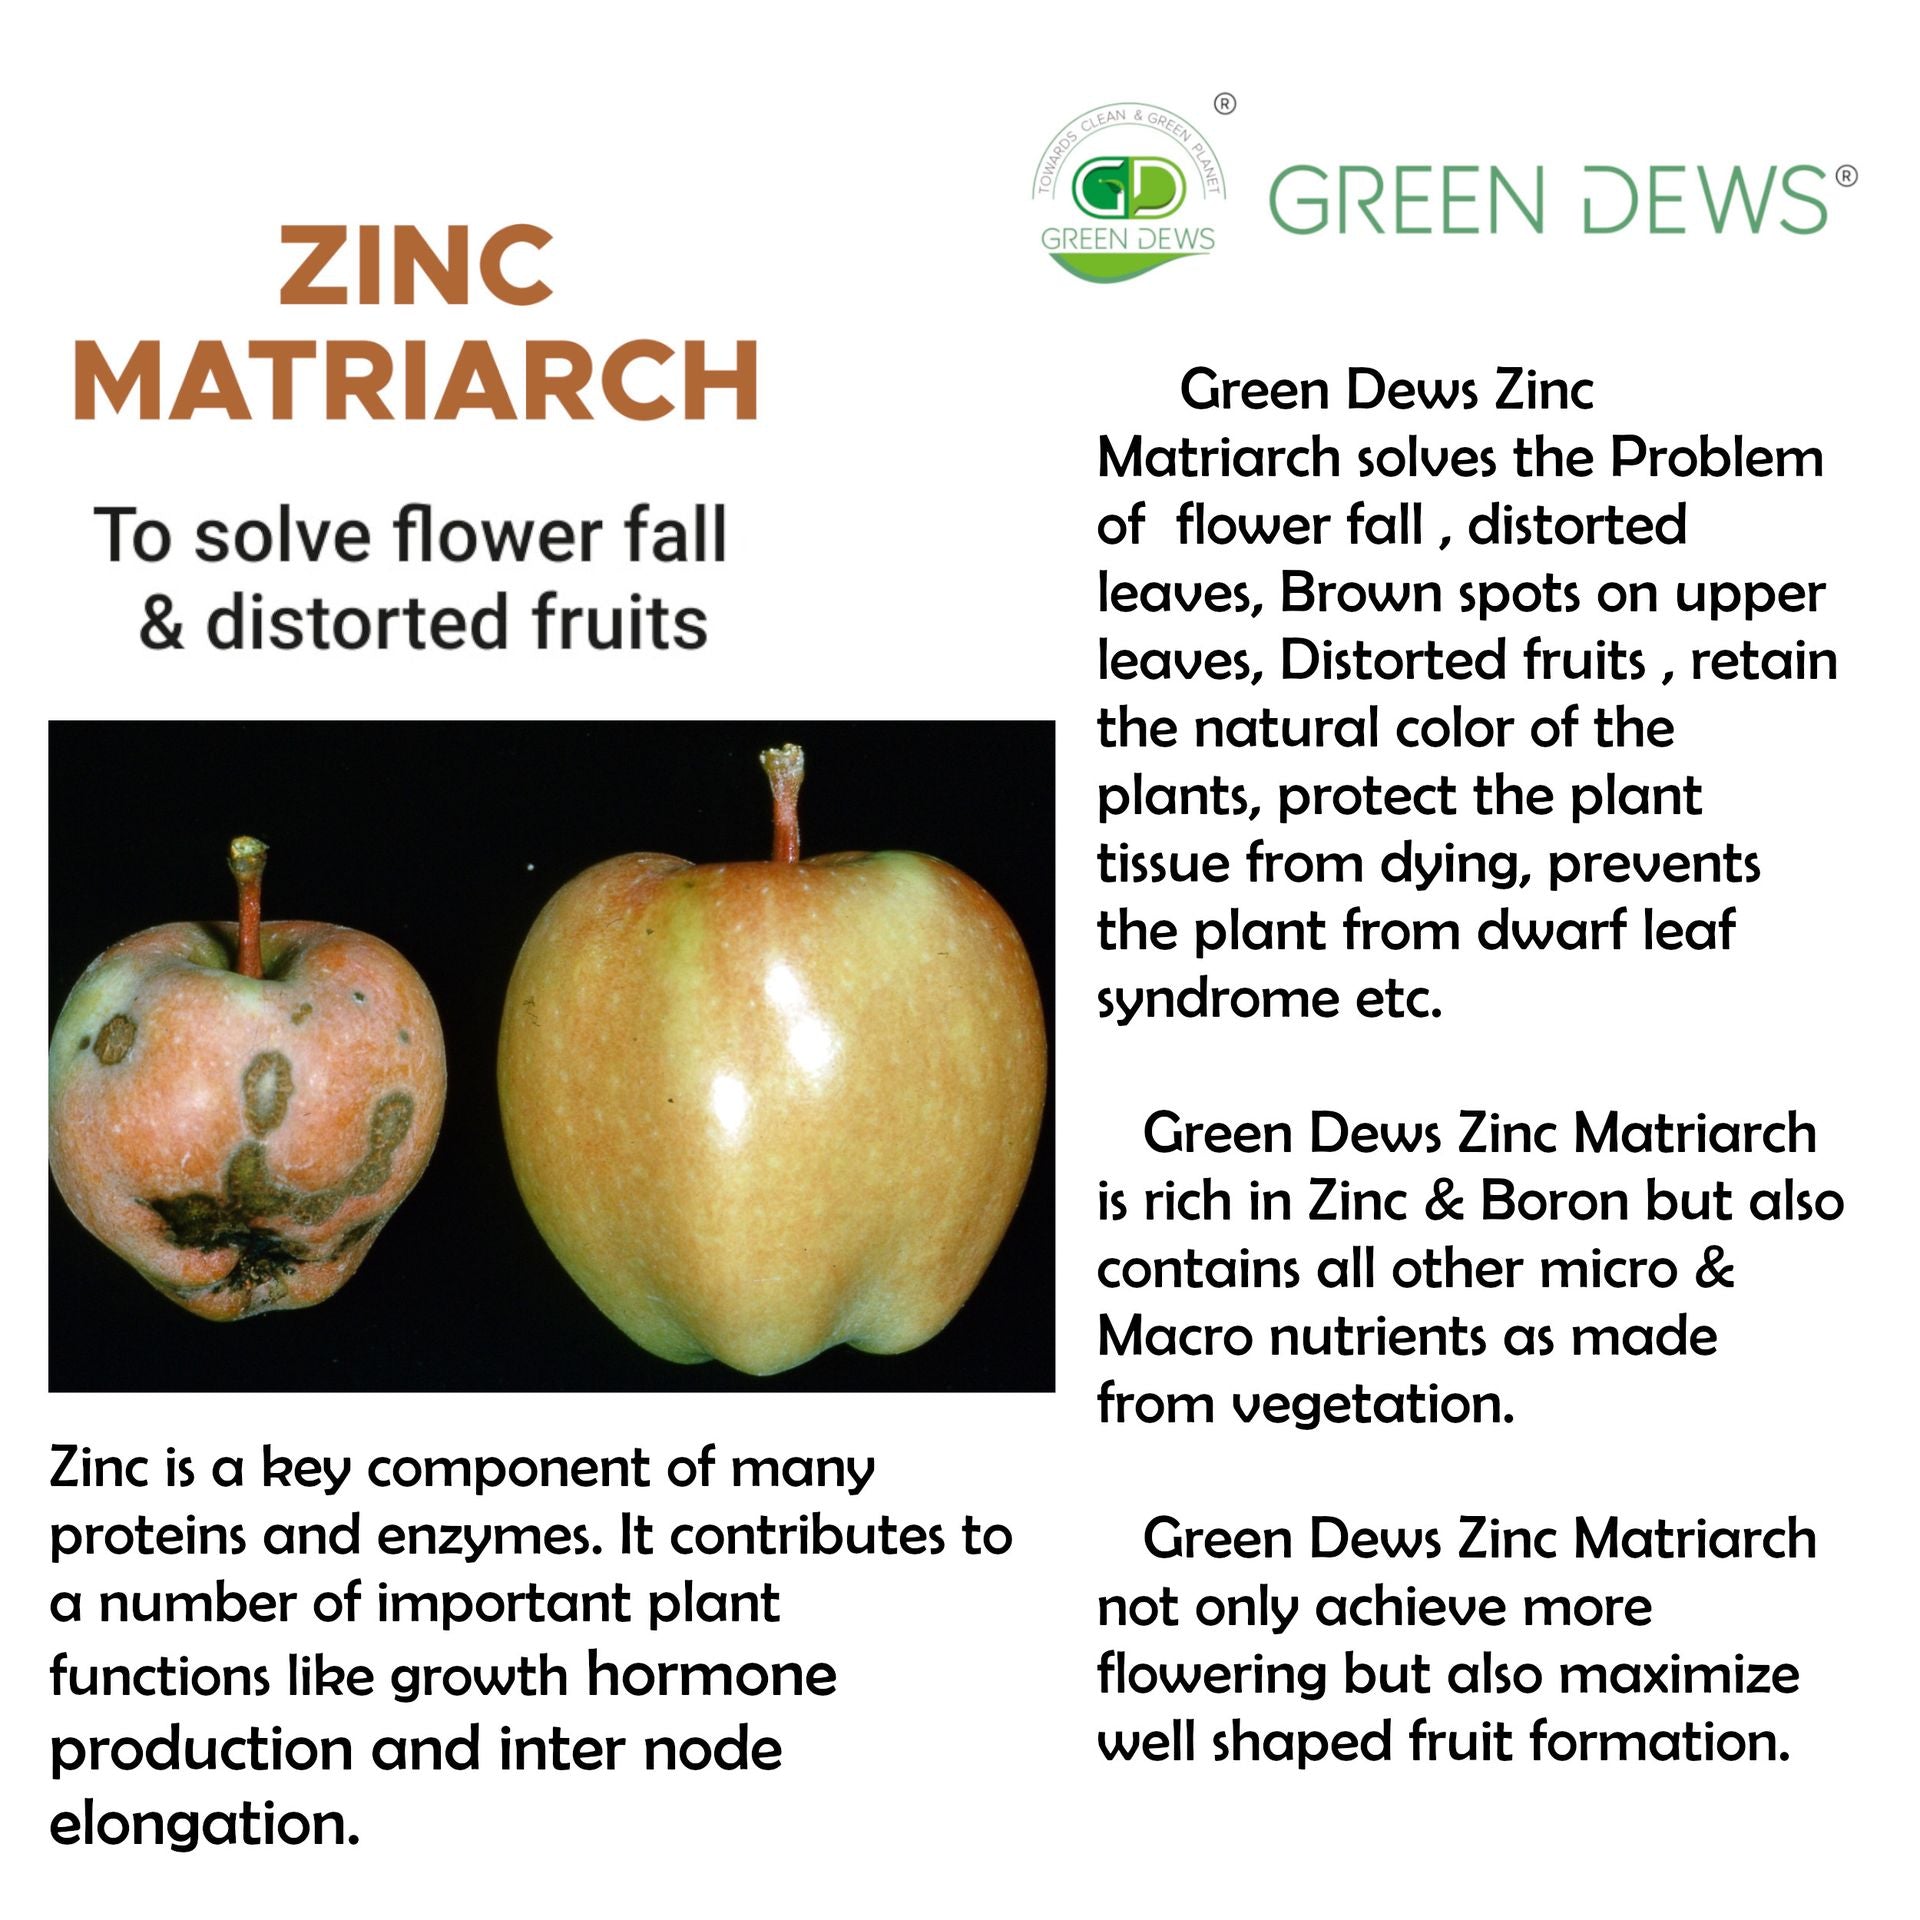 Green Dews Zinc Matriarch Organic Zinc Fertilizer for Plants to Solve Flower Fall for Indoor outdoor Plants Fertilizers for Home Gardening - hfnl!fe